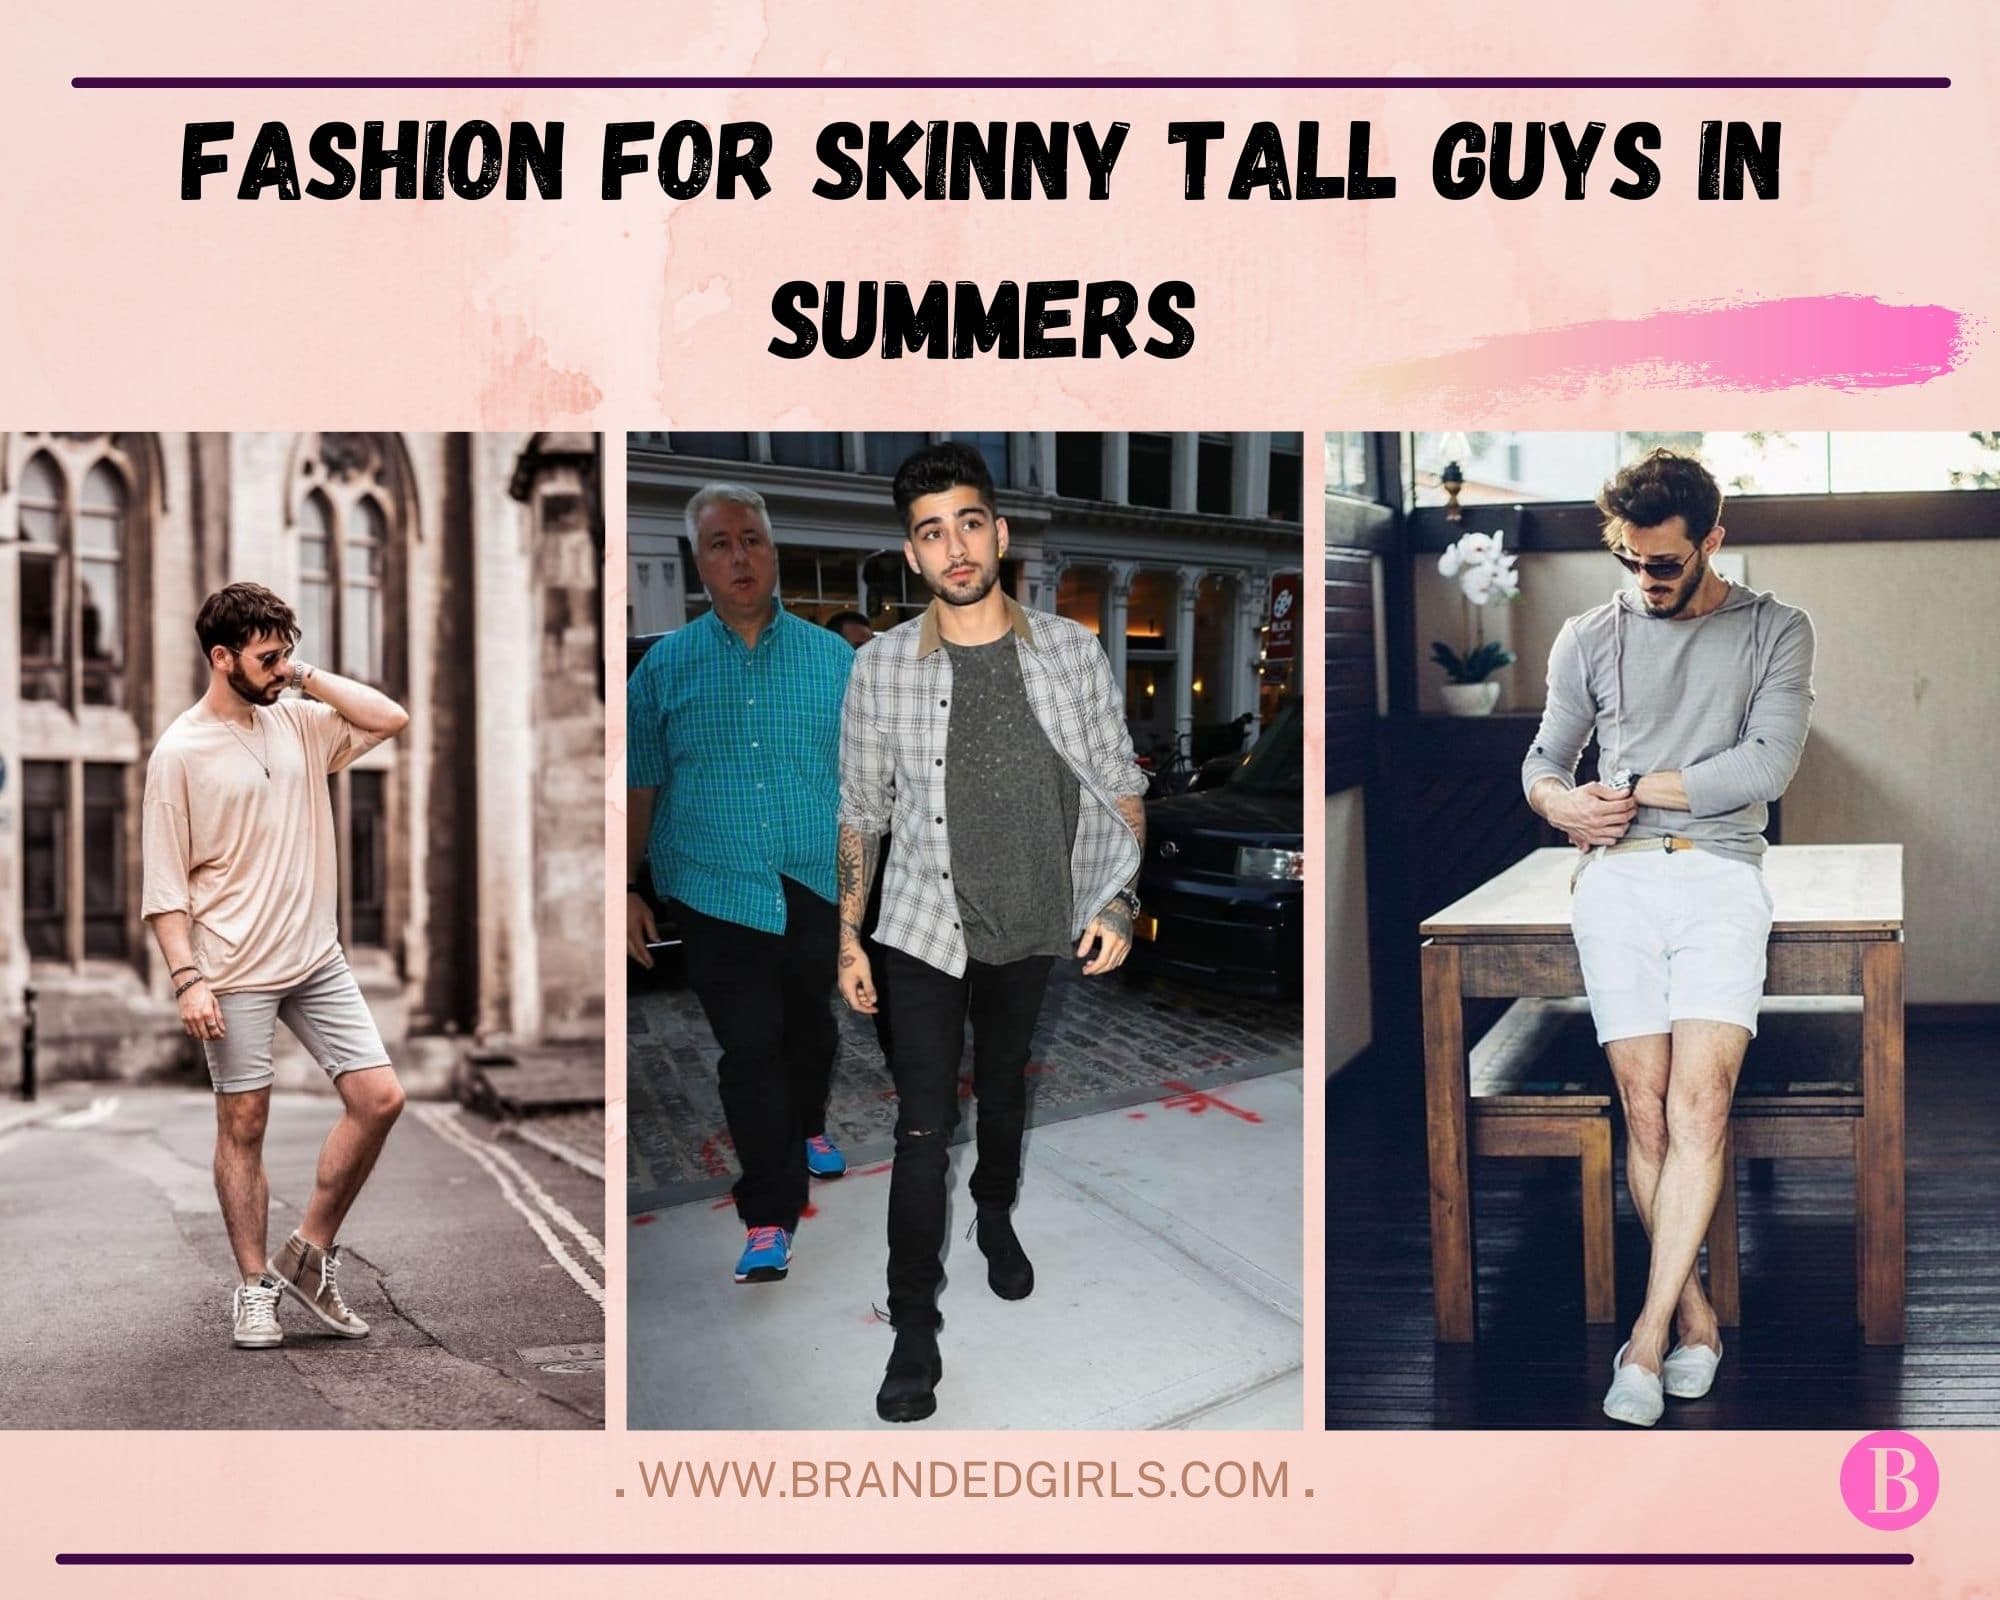 Skinny Tall Guys 4 1 